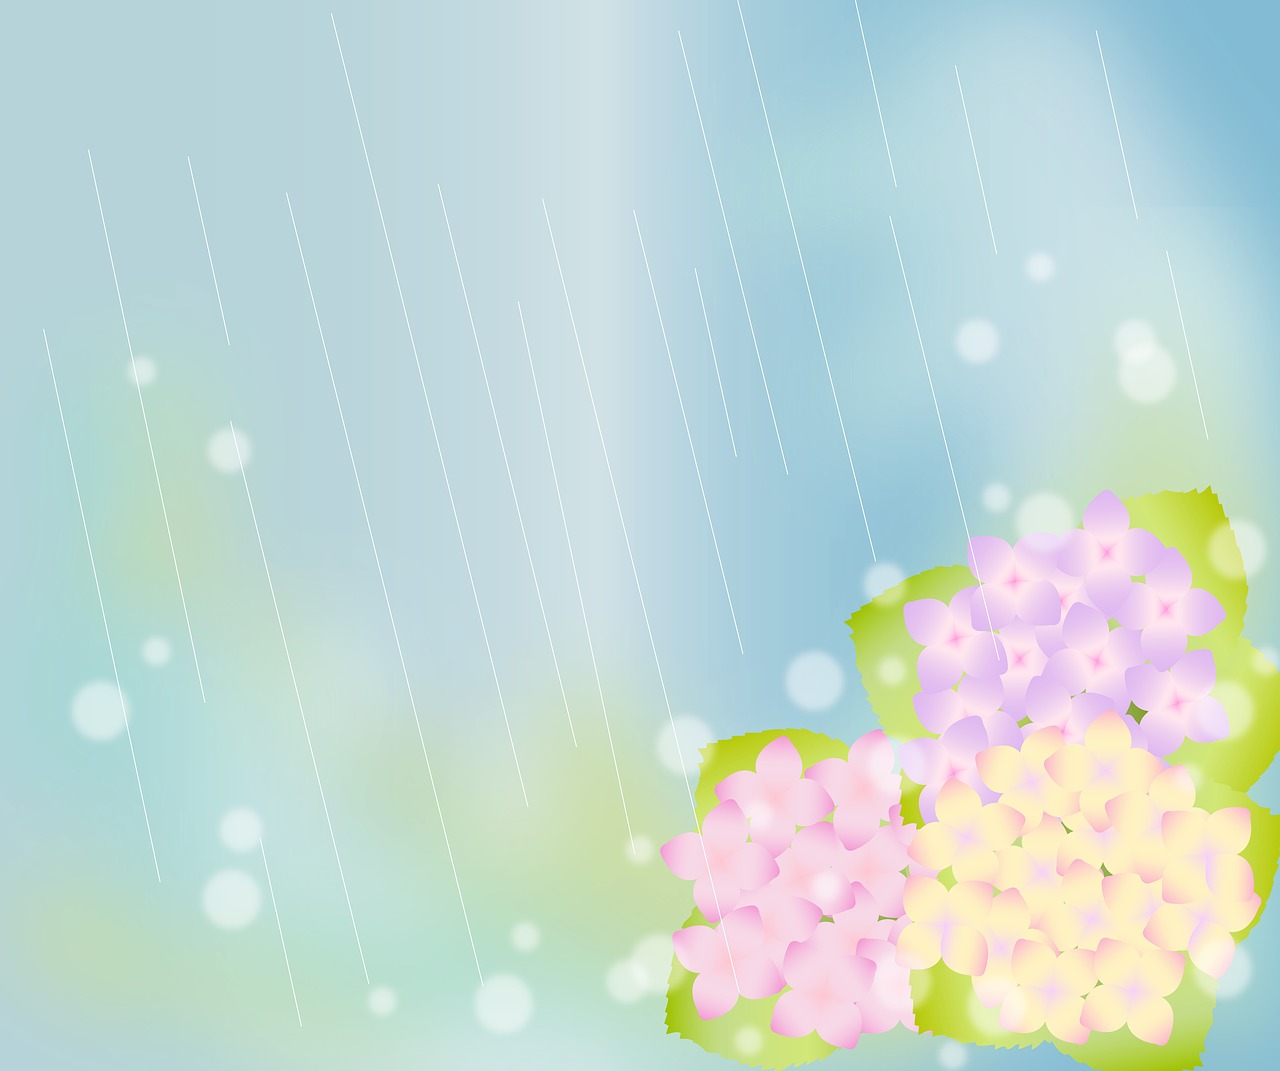 hydrangeas  rainy background  blurred background free photo